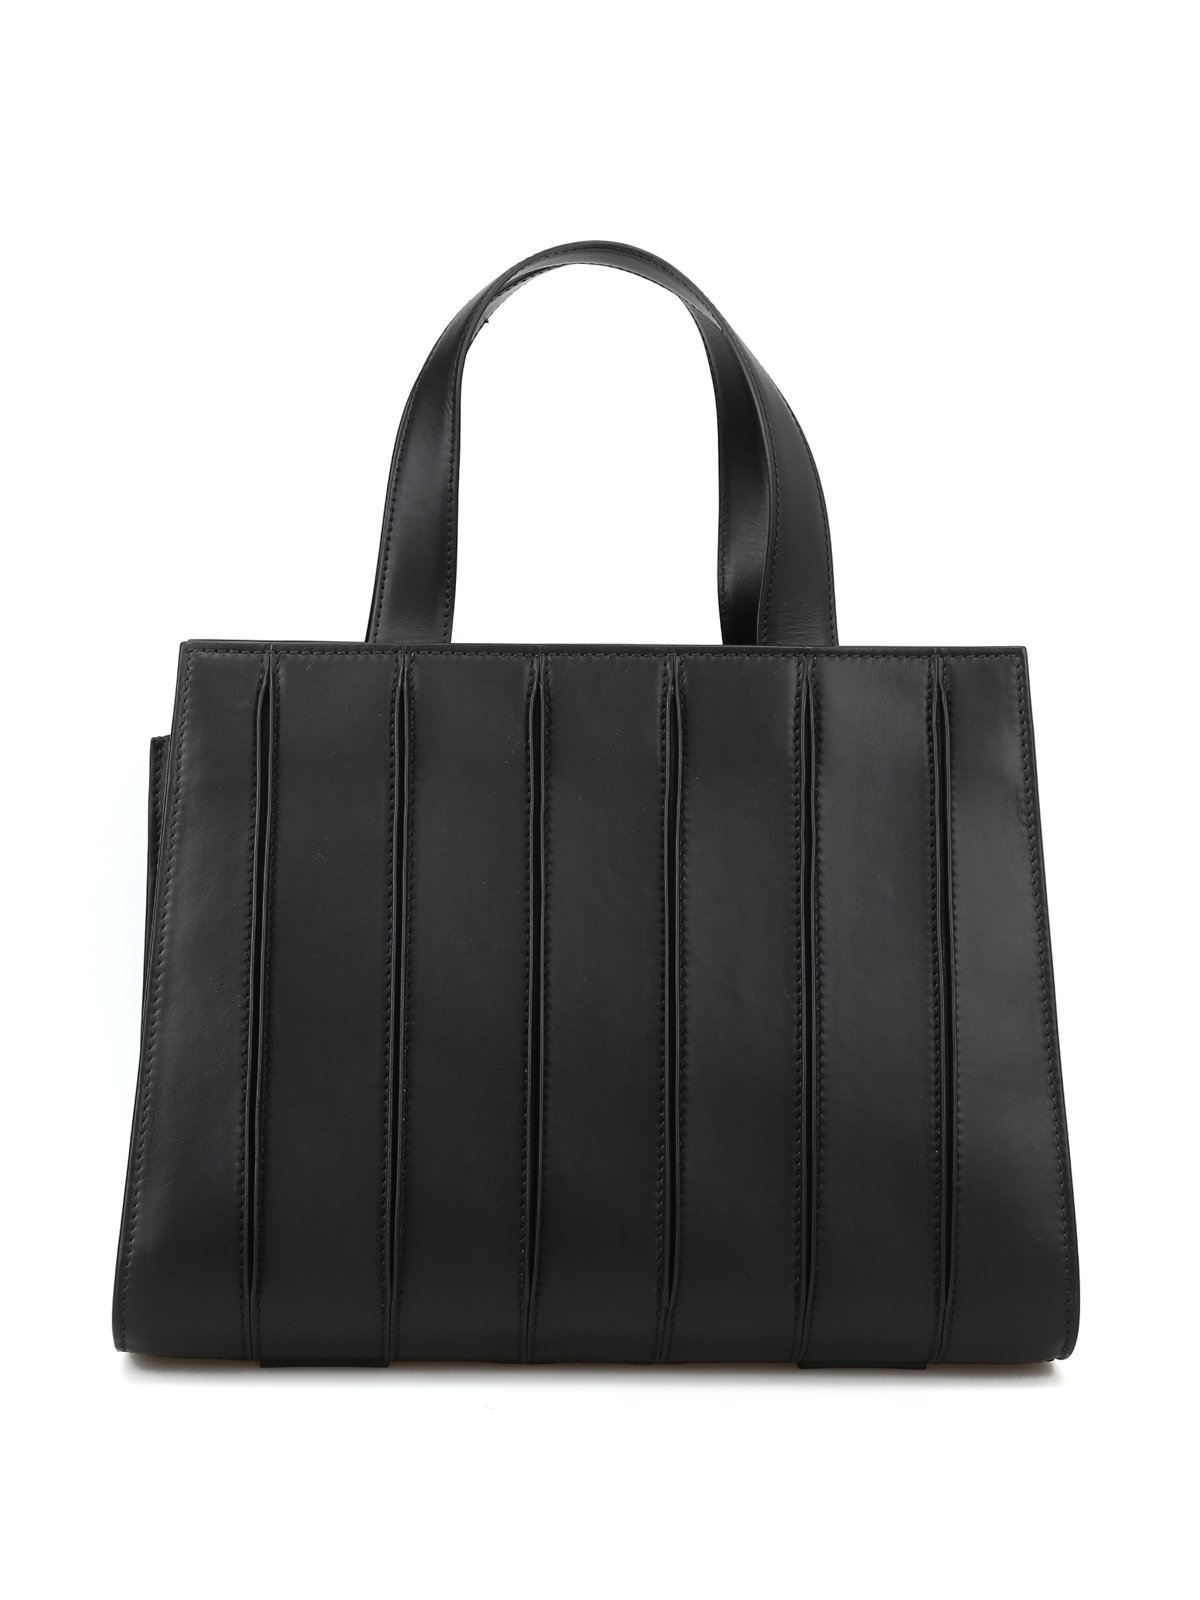 max-mara-totes-bags-medium-black-leather-whitney-bag-00000145076f00s001.jpeg